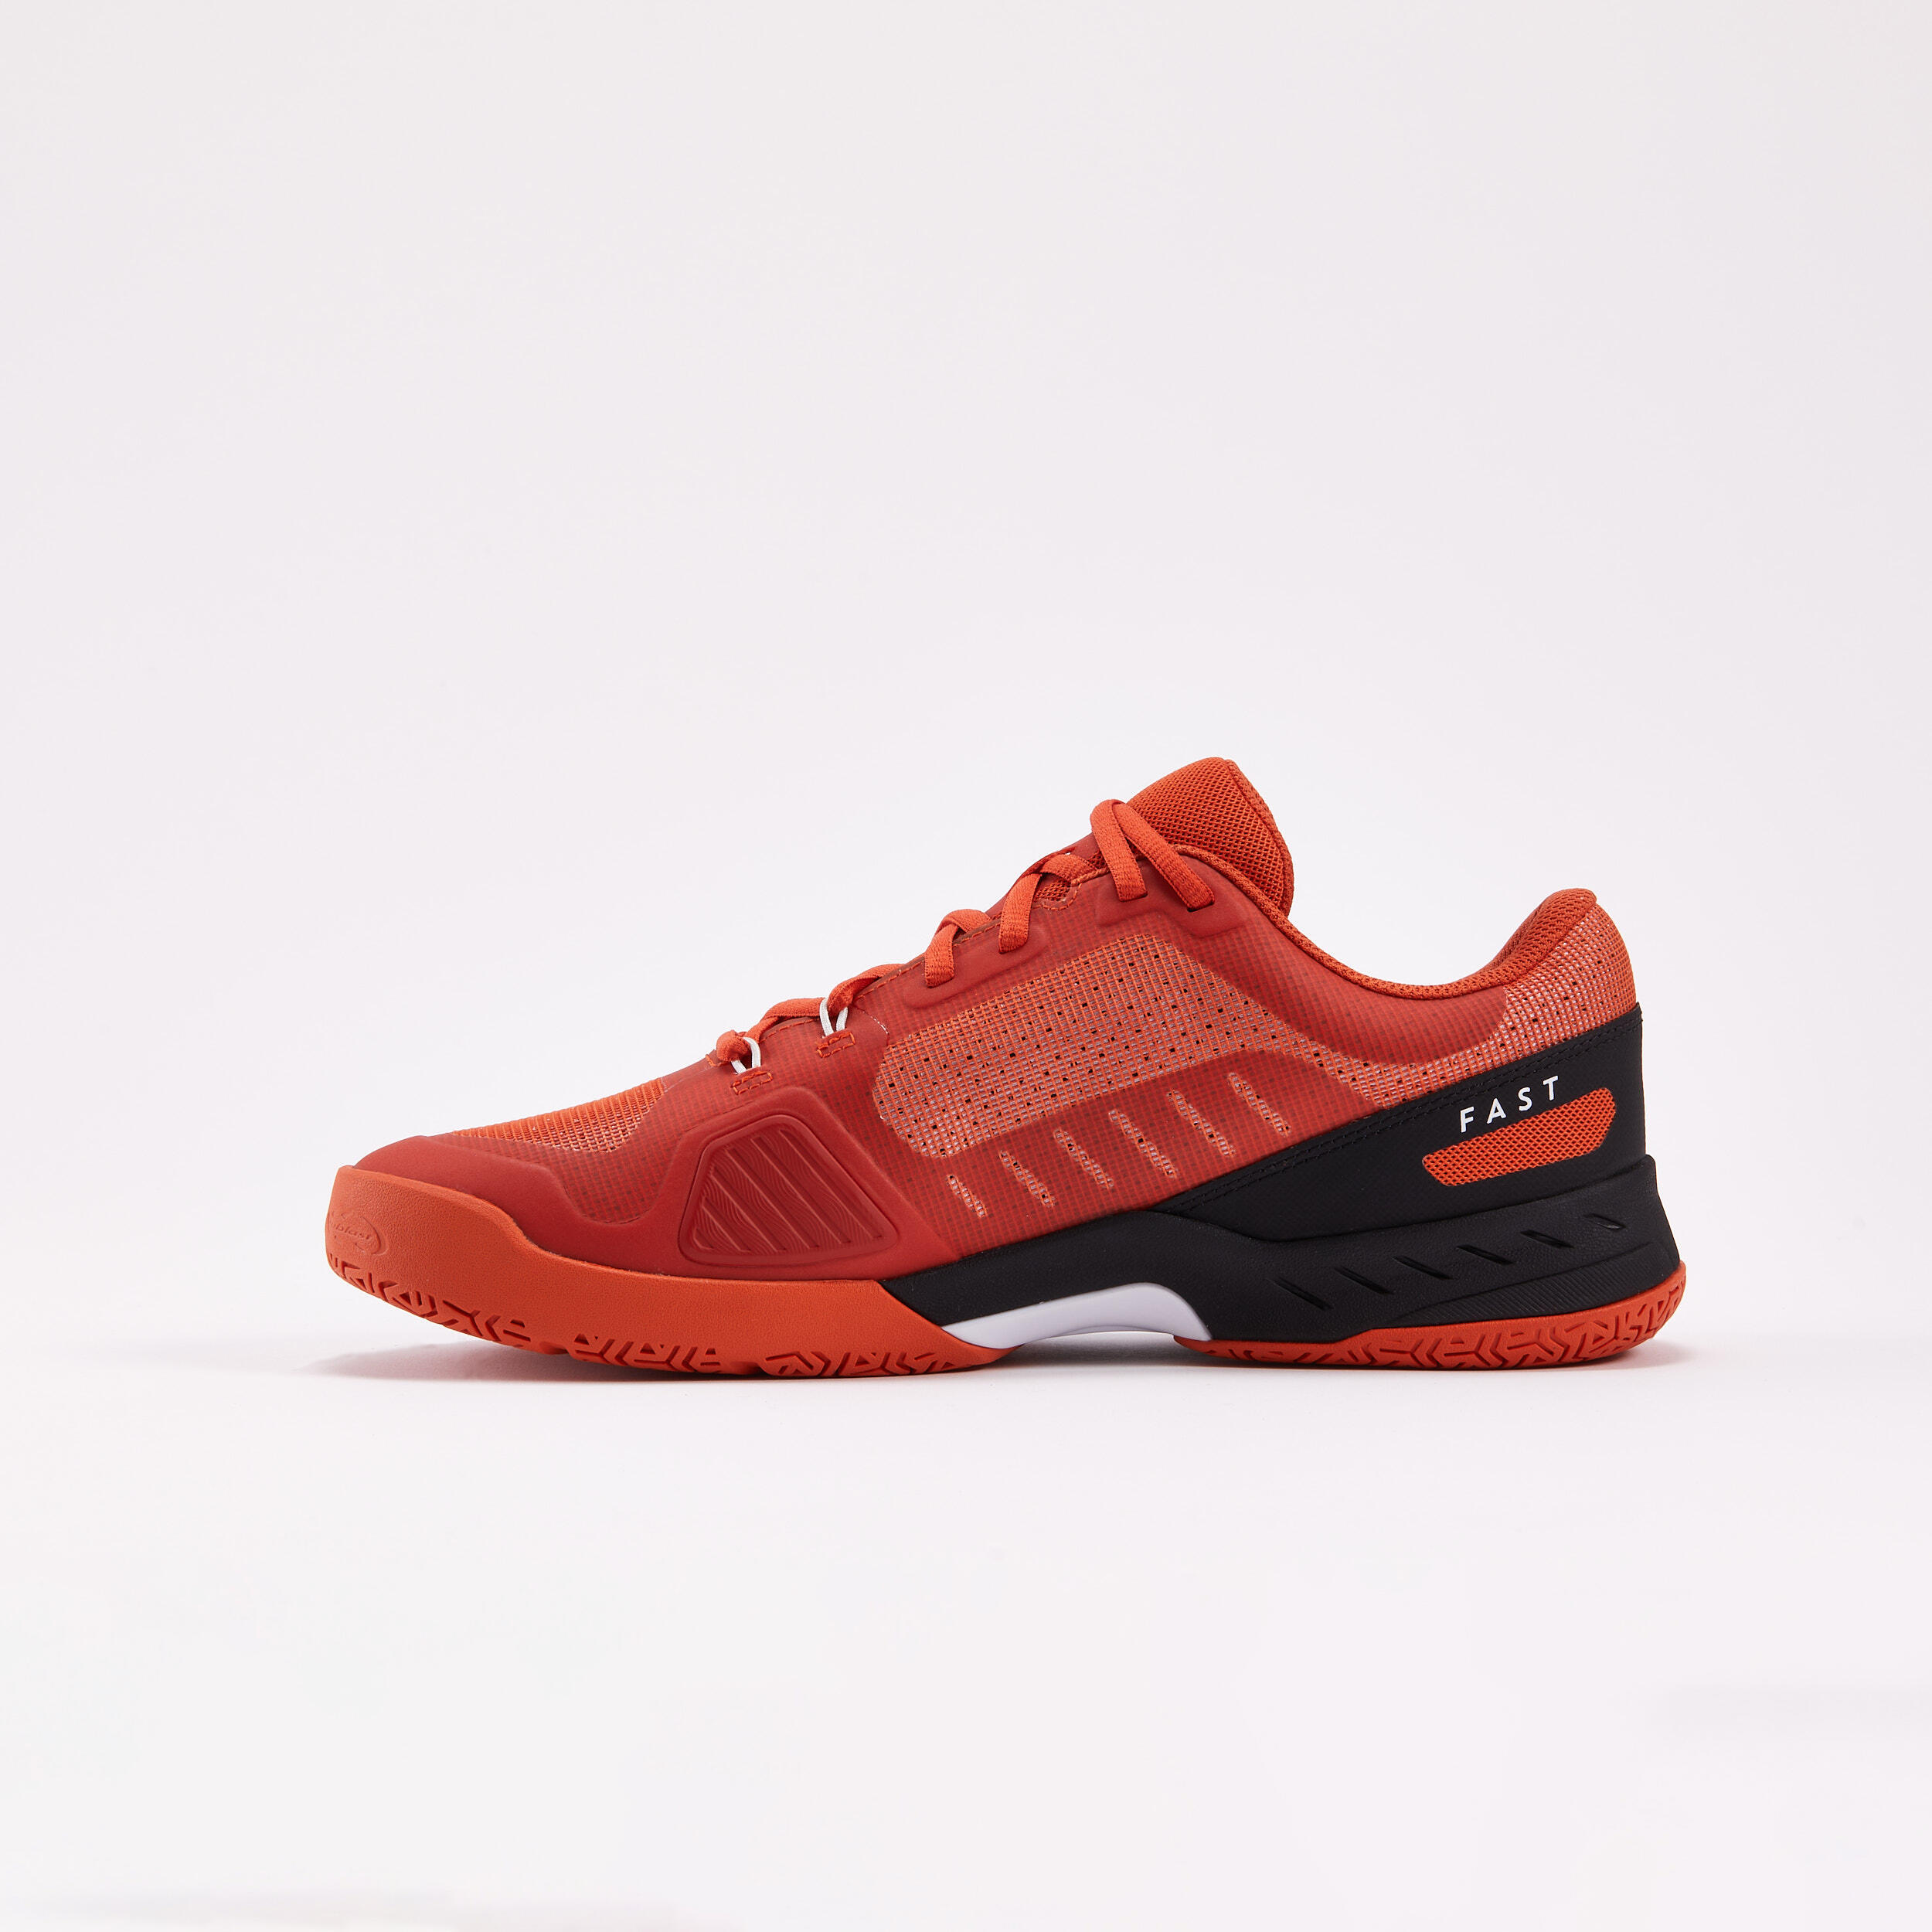 Men's Multicourt Tennis Shoes Fast - Terracotta Red/Black 3/9